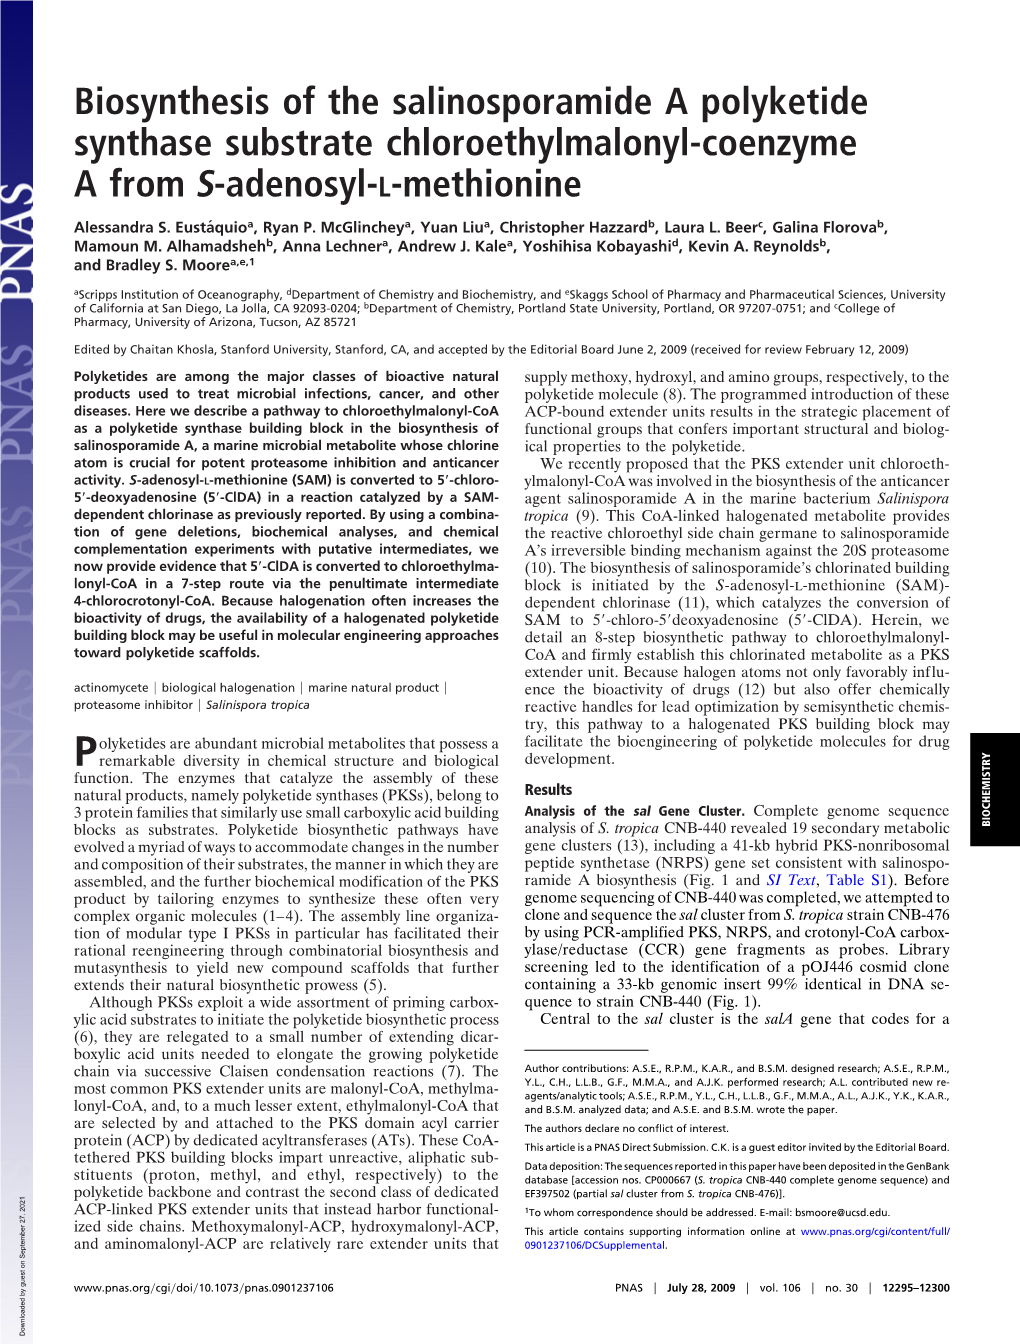 Biosynthesis of the Salinosporamide a Polyketide Synthase Substrate Chloroethylmalonyl-Coenzyme a from S-Adenosyl-L-Methionine